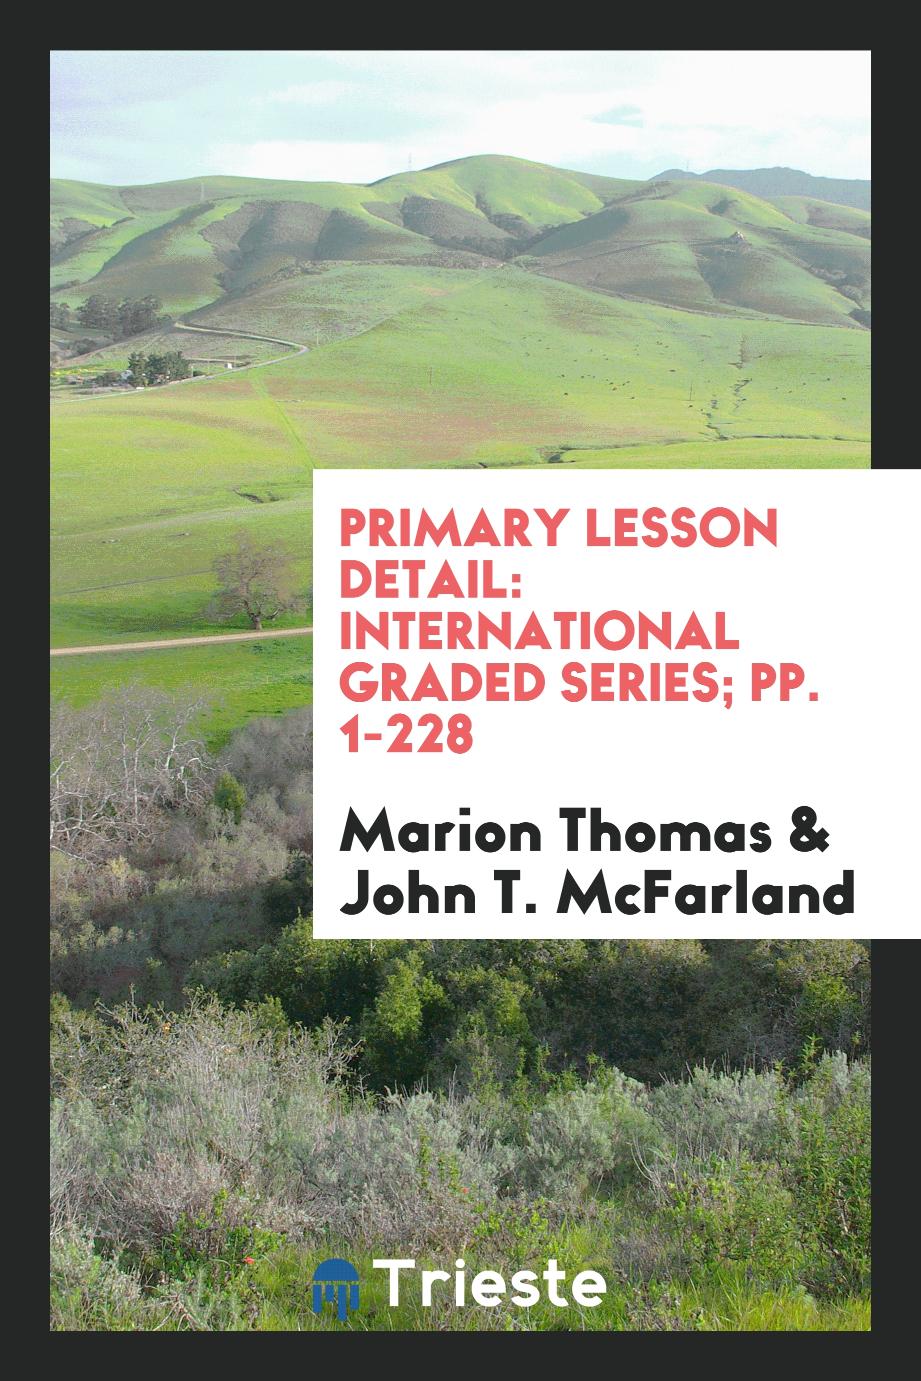 Primary Lesson Detail: International Graded Series; pp. 1-228